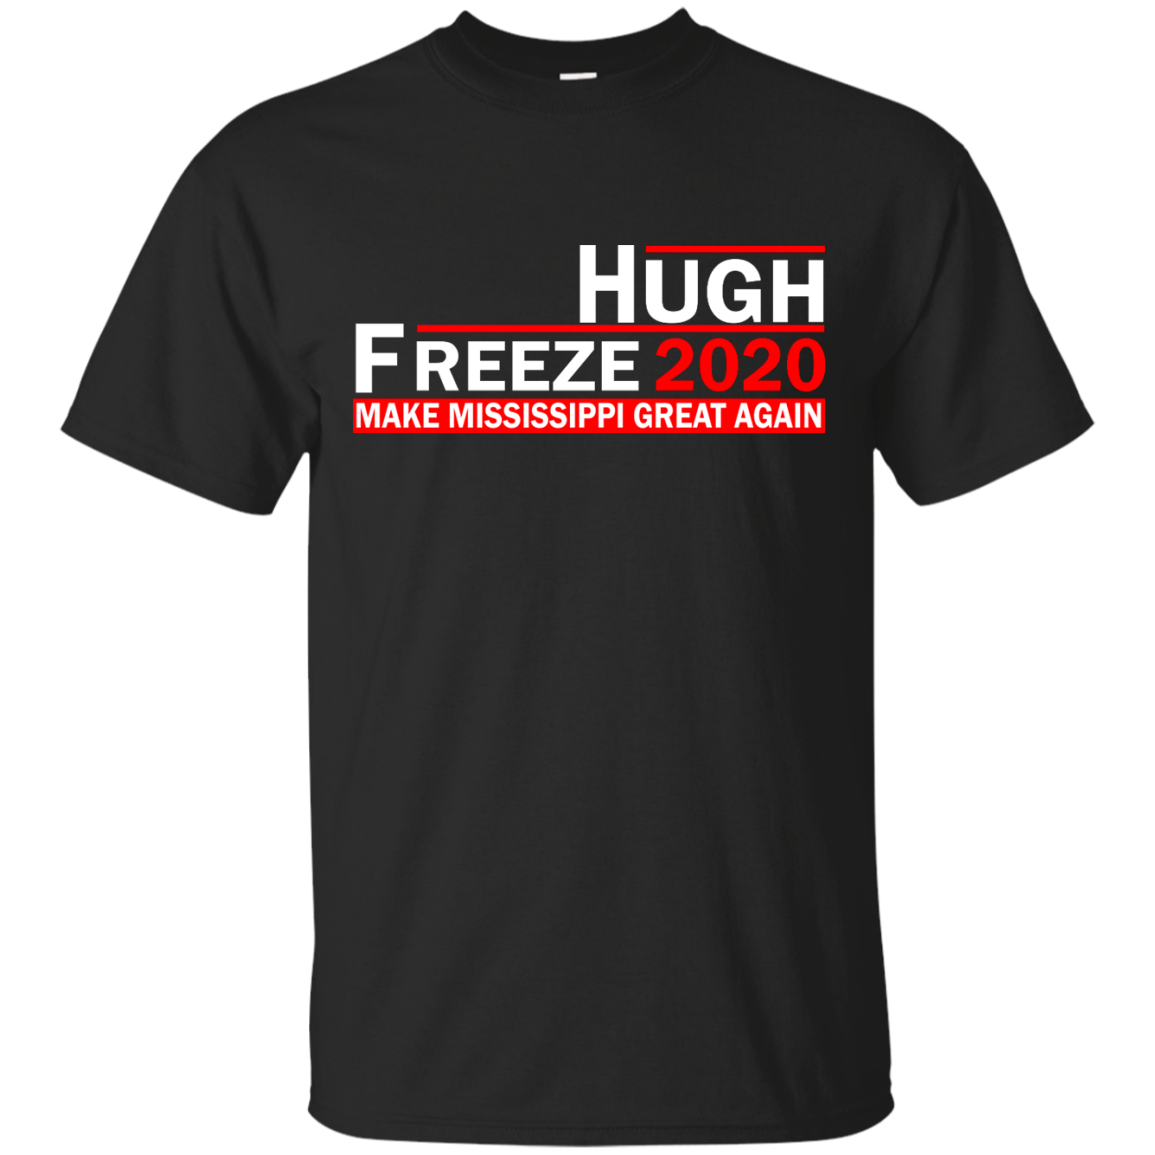 Hugh Freeze 2020 t-shirt, hoodie, racerback